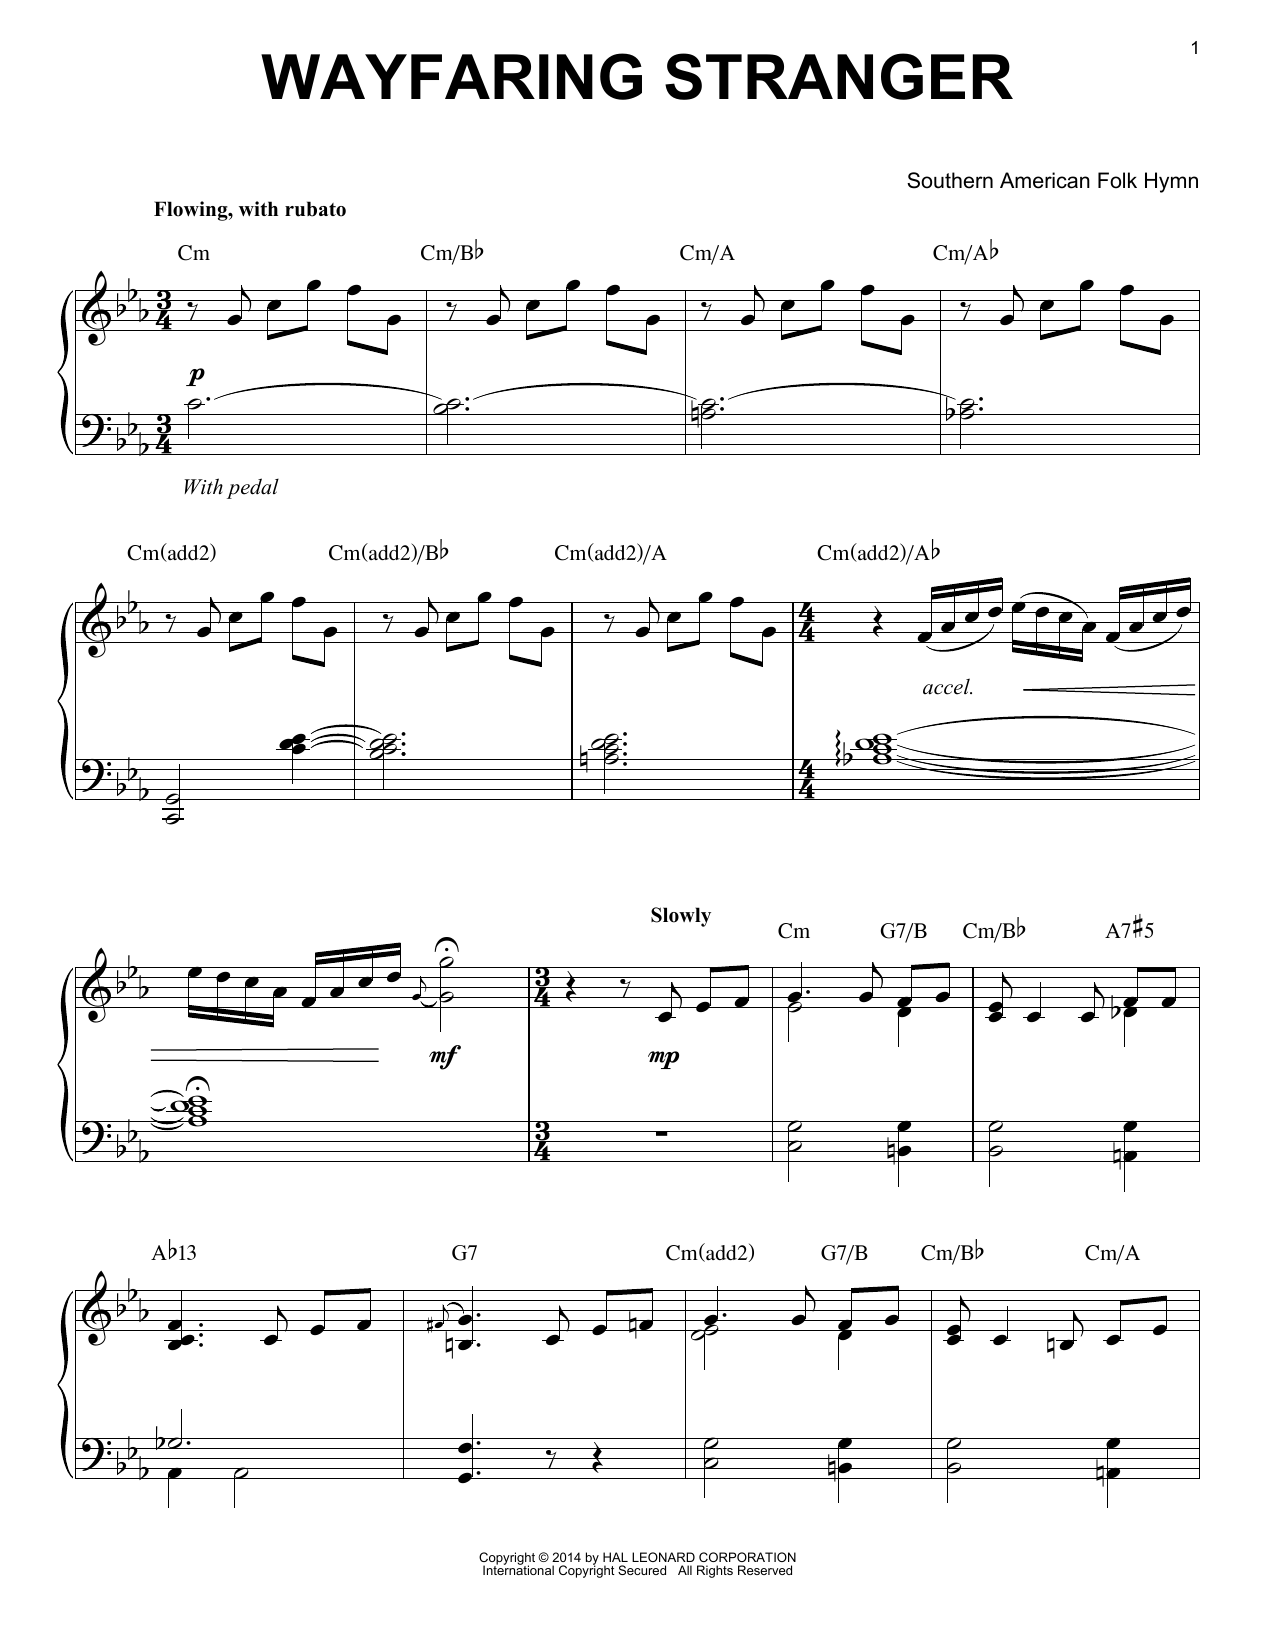 Southern American Folk Hymn Wayfaring Stranger [Jazz version] (arr. Brent Edstrom) Sheet Music Notes & Chords for Piano - Download or Print PDF